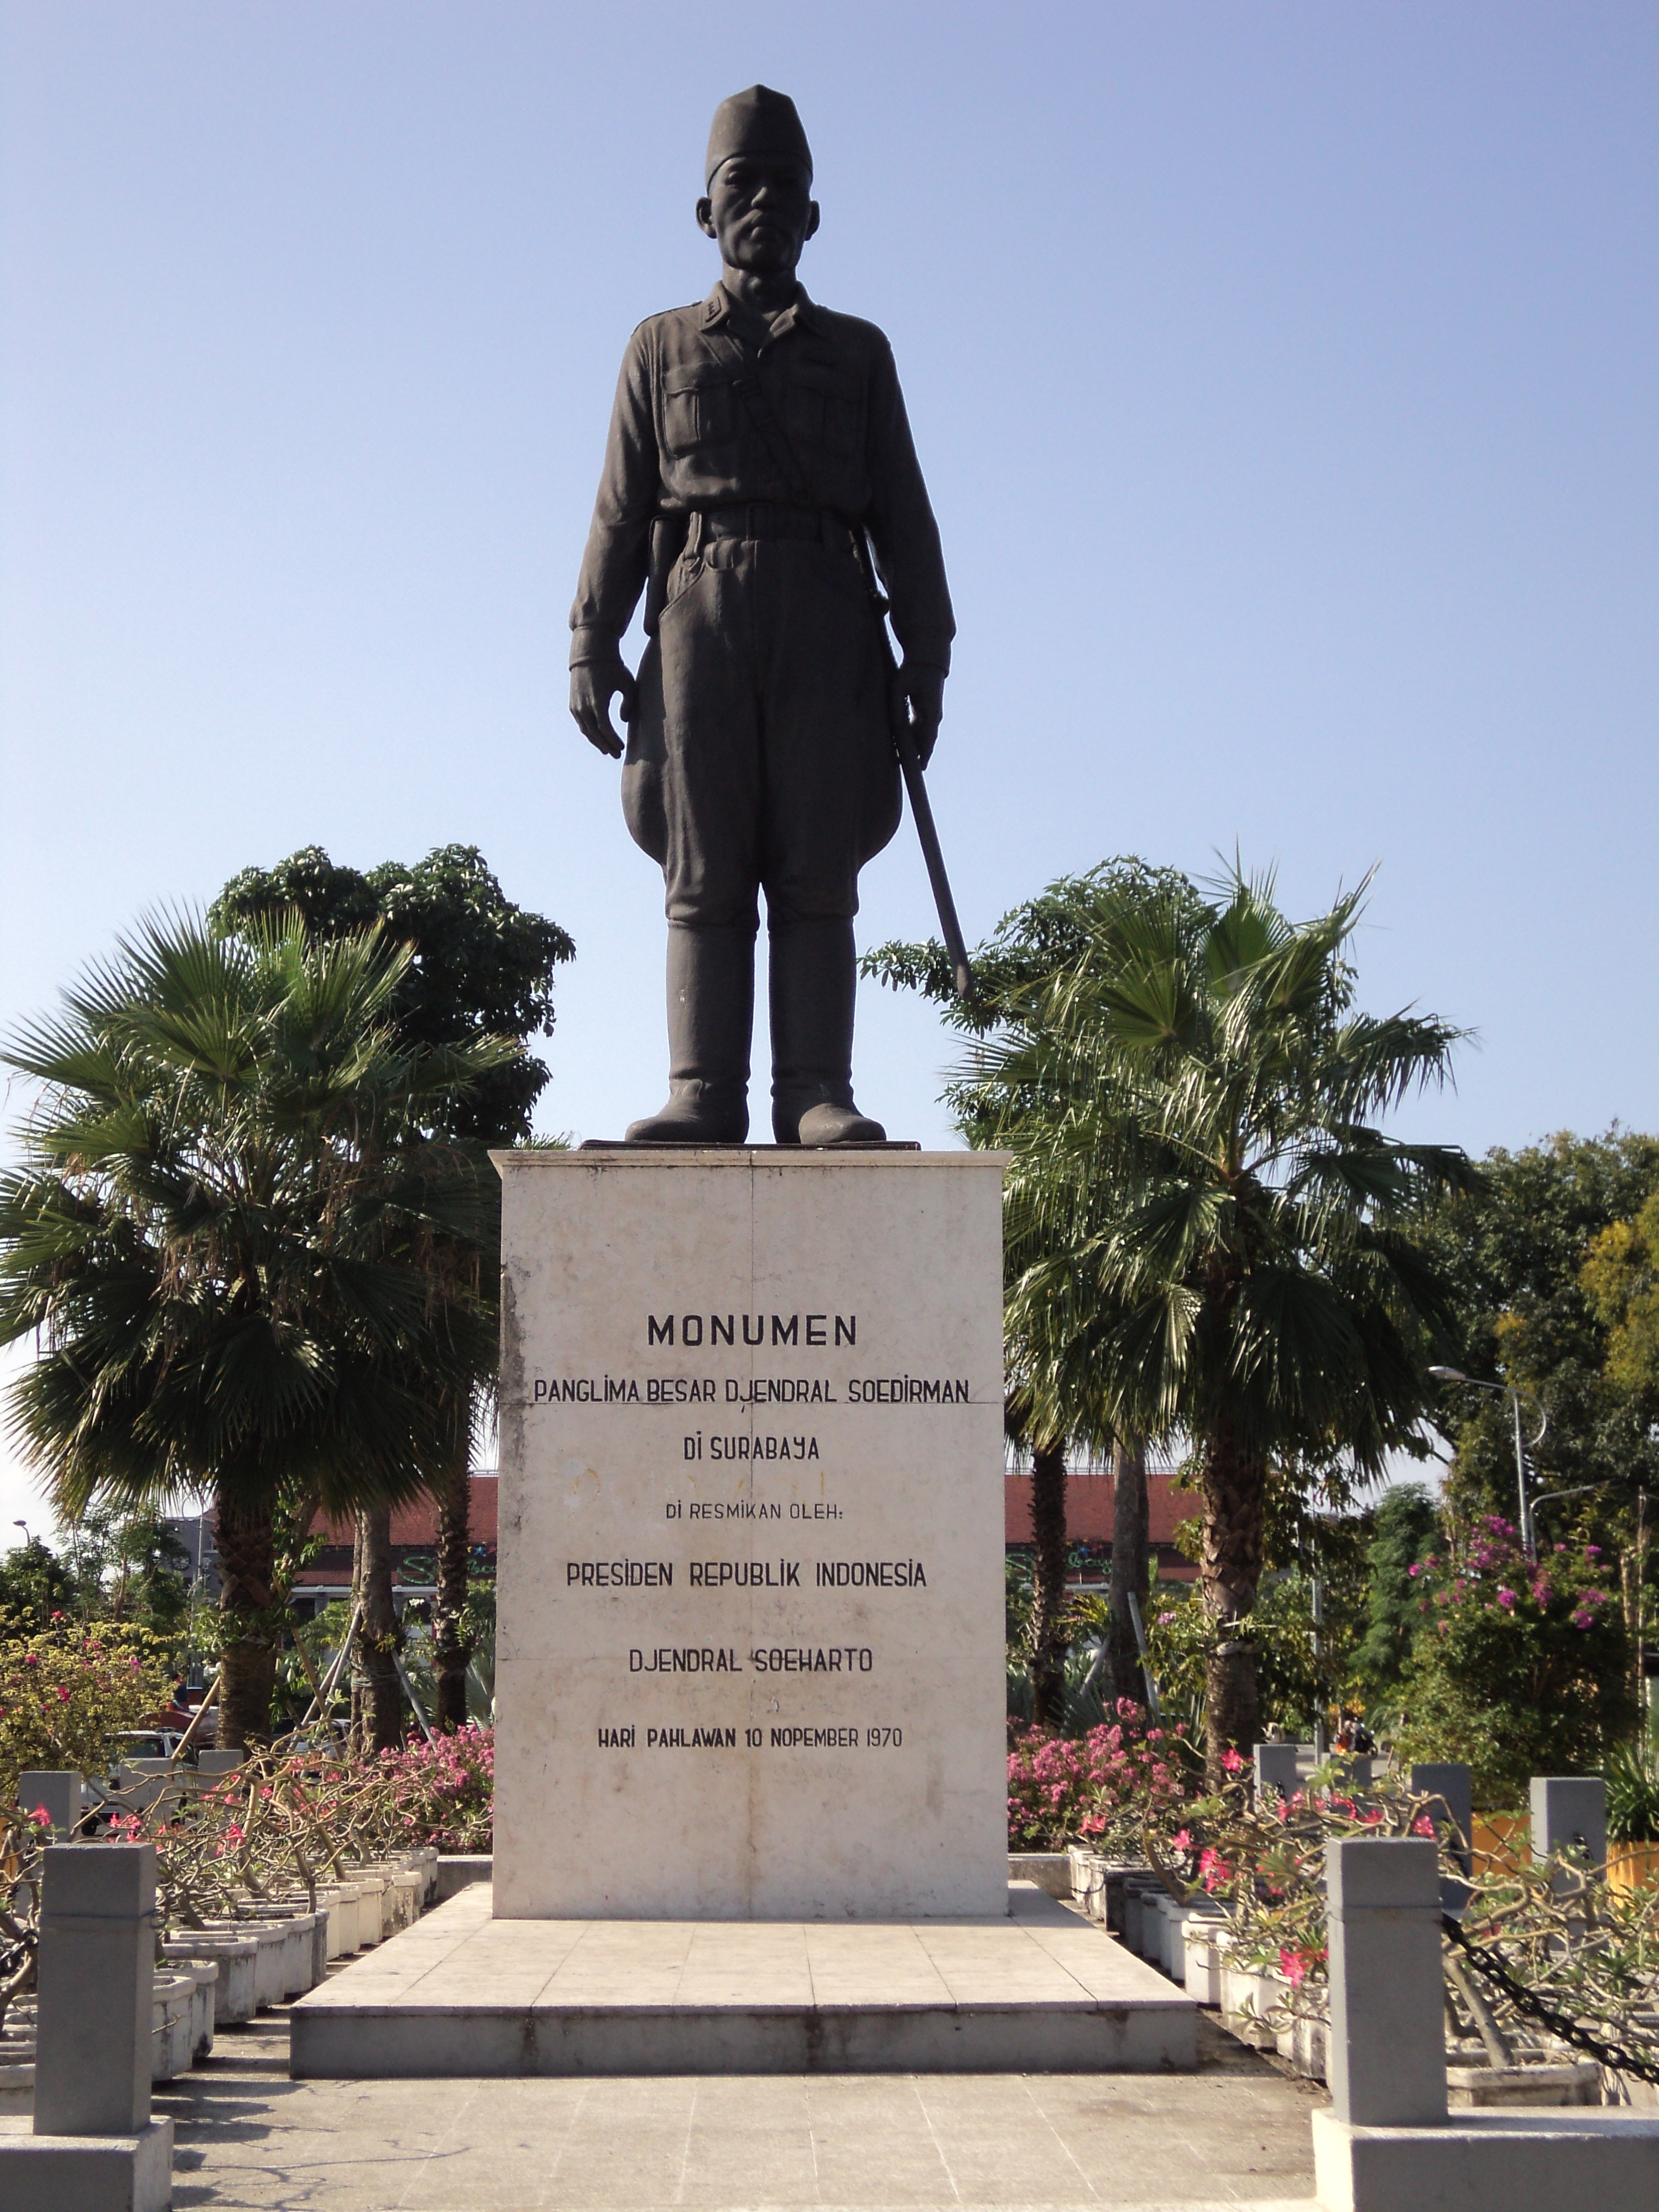  Gambar  Untuk Monumen Monumen Surabaya